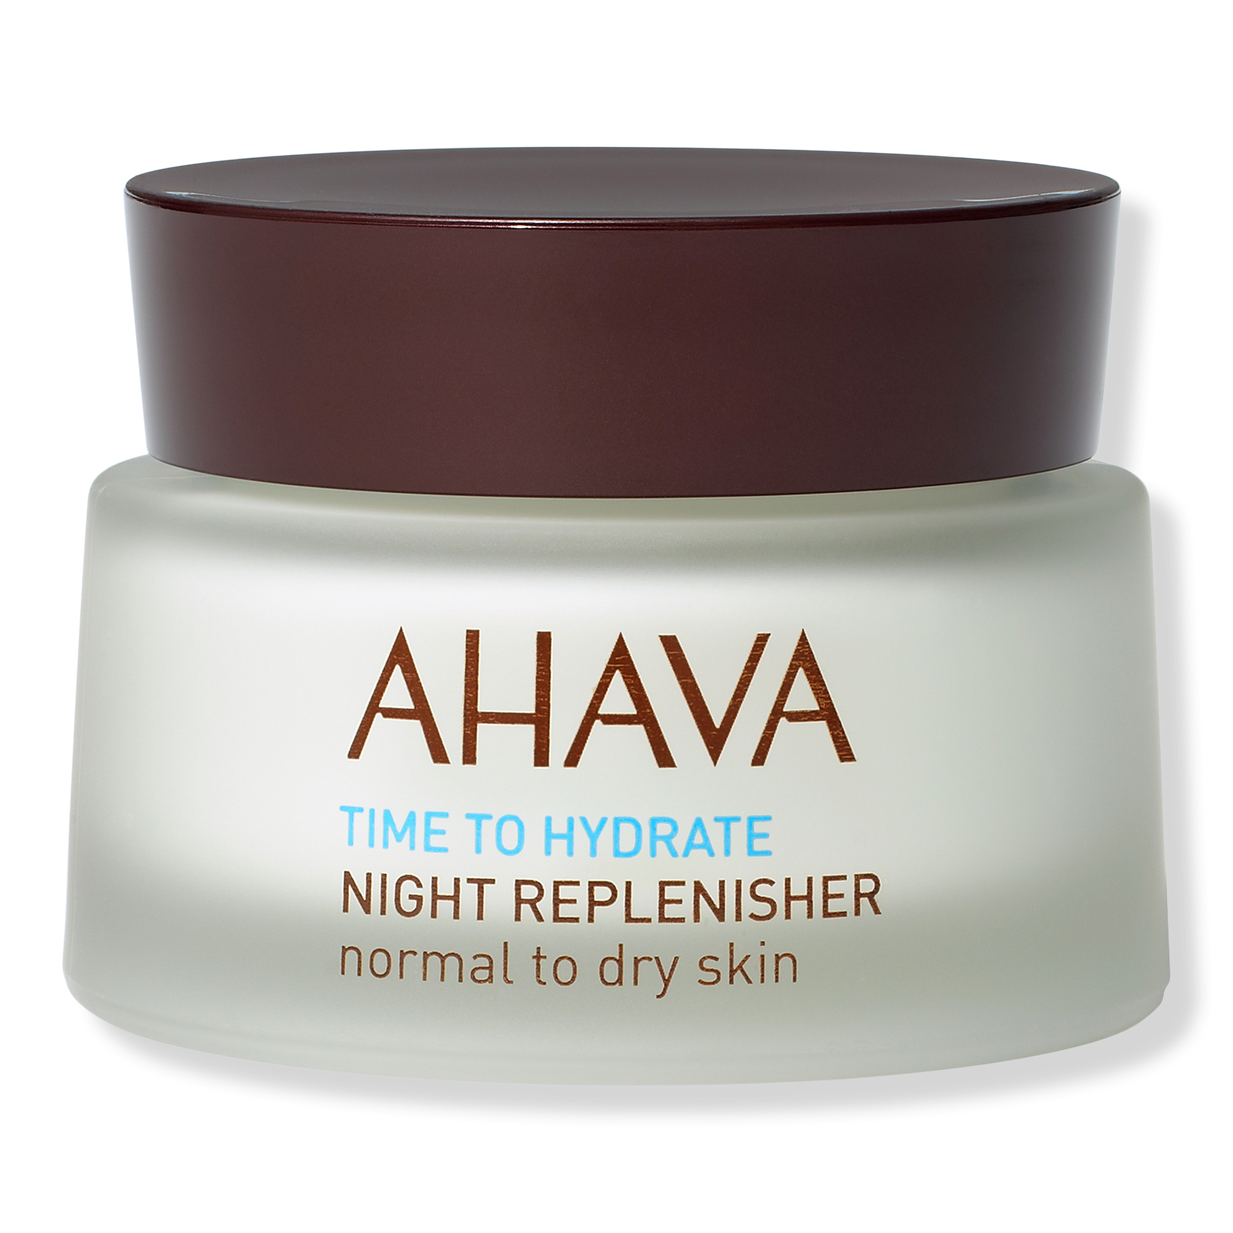 Ahava Beauty Ulta - | to Night Replenisher Dry Normal